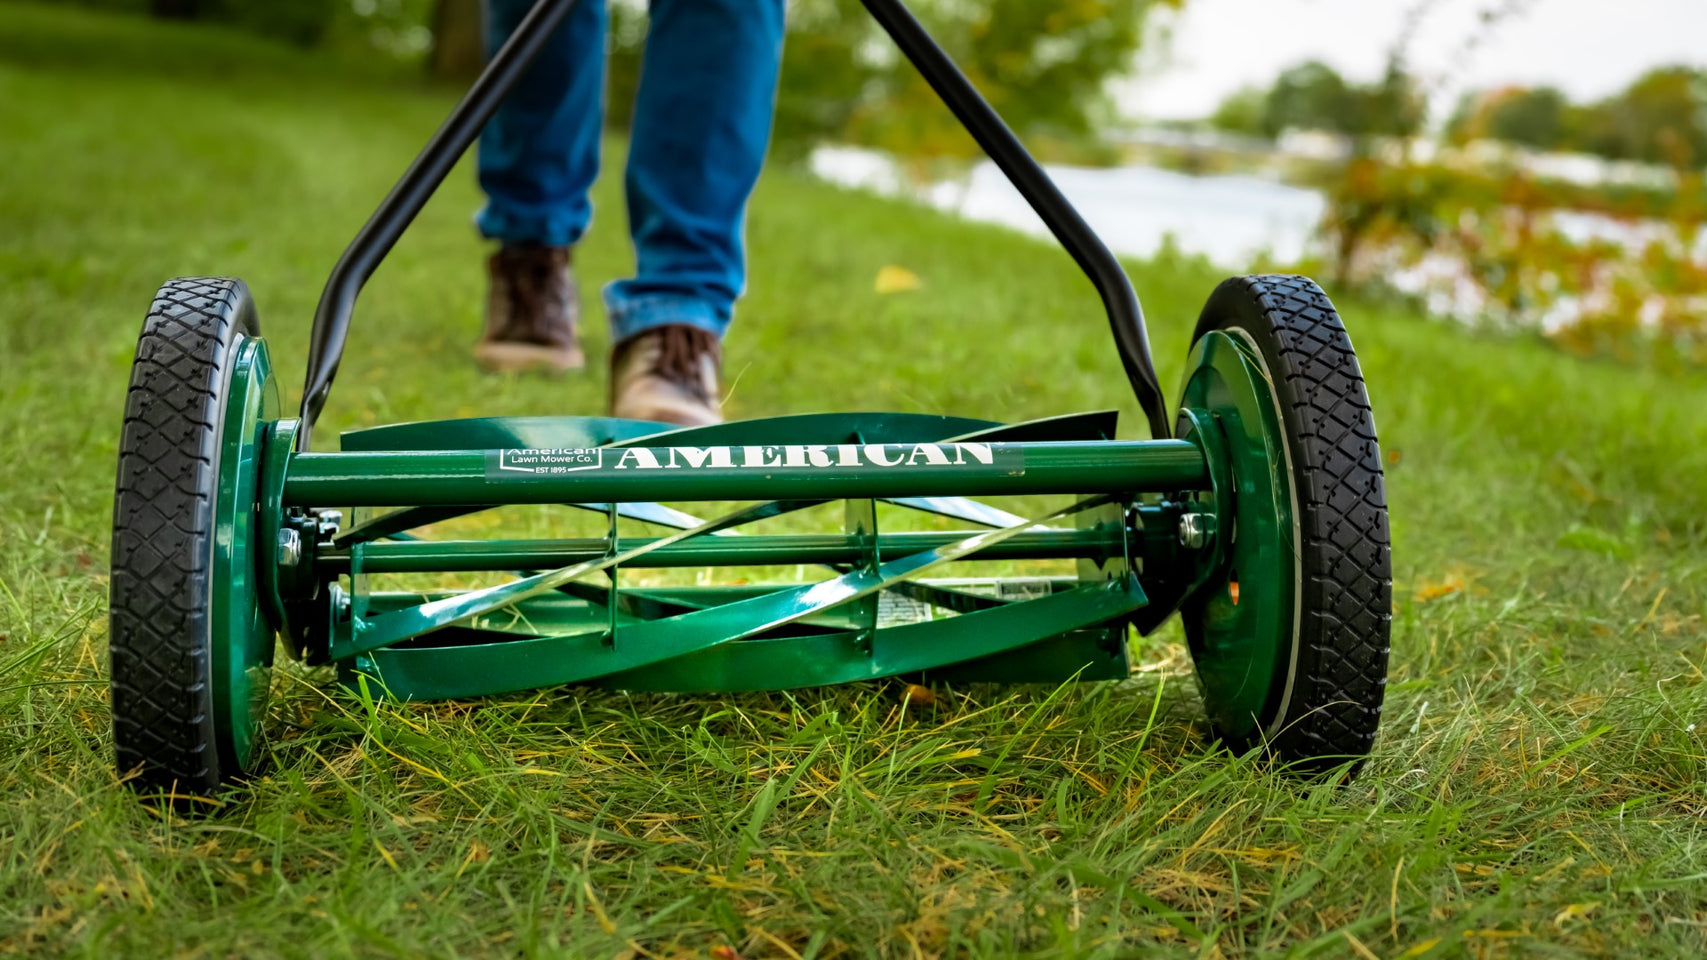 Earthwise Lawn Mower Reel Grass Catcher